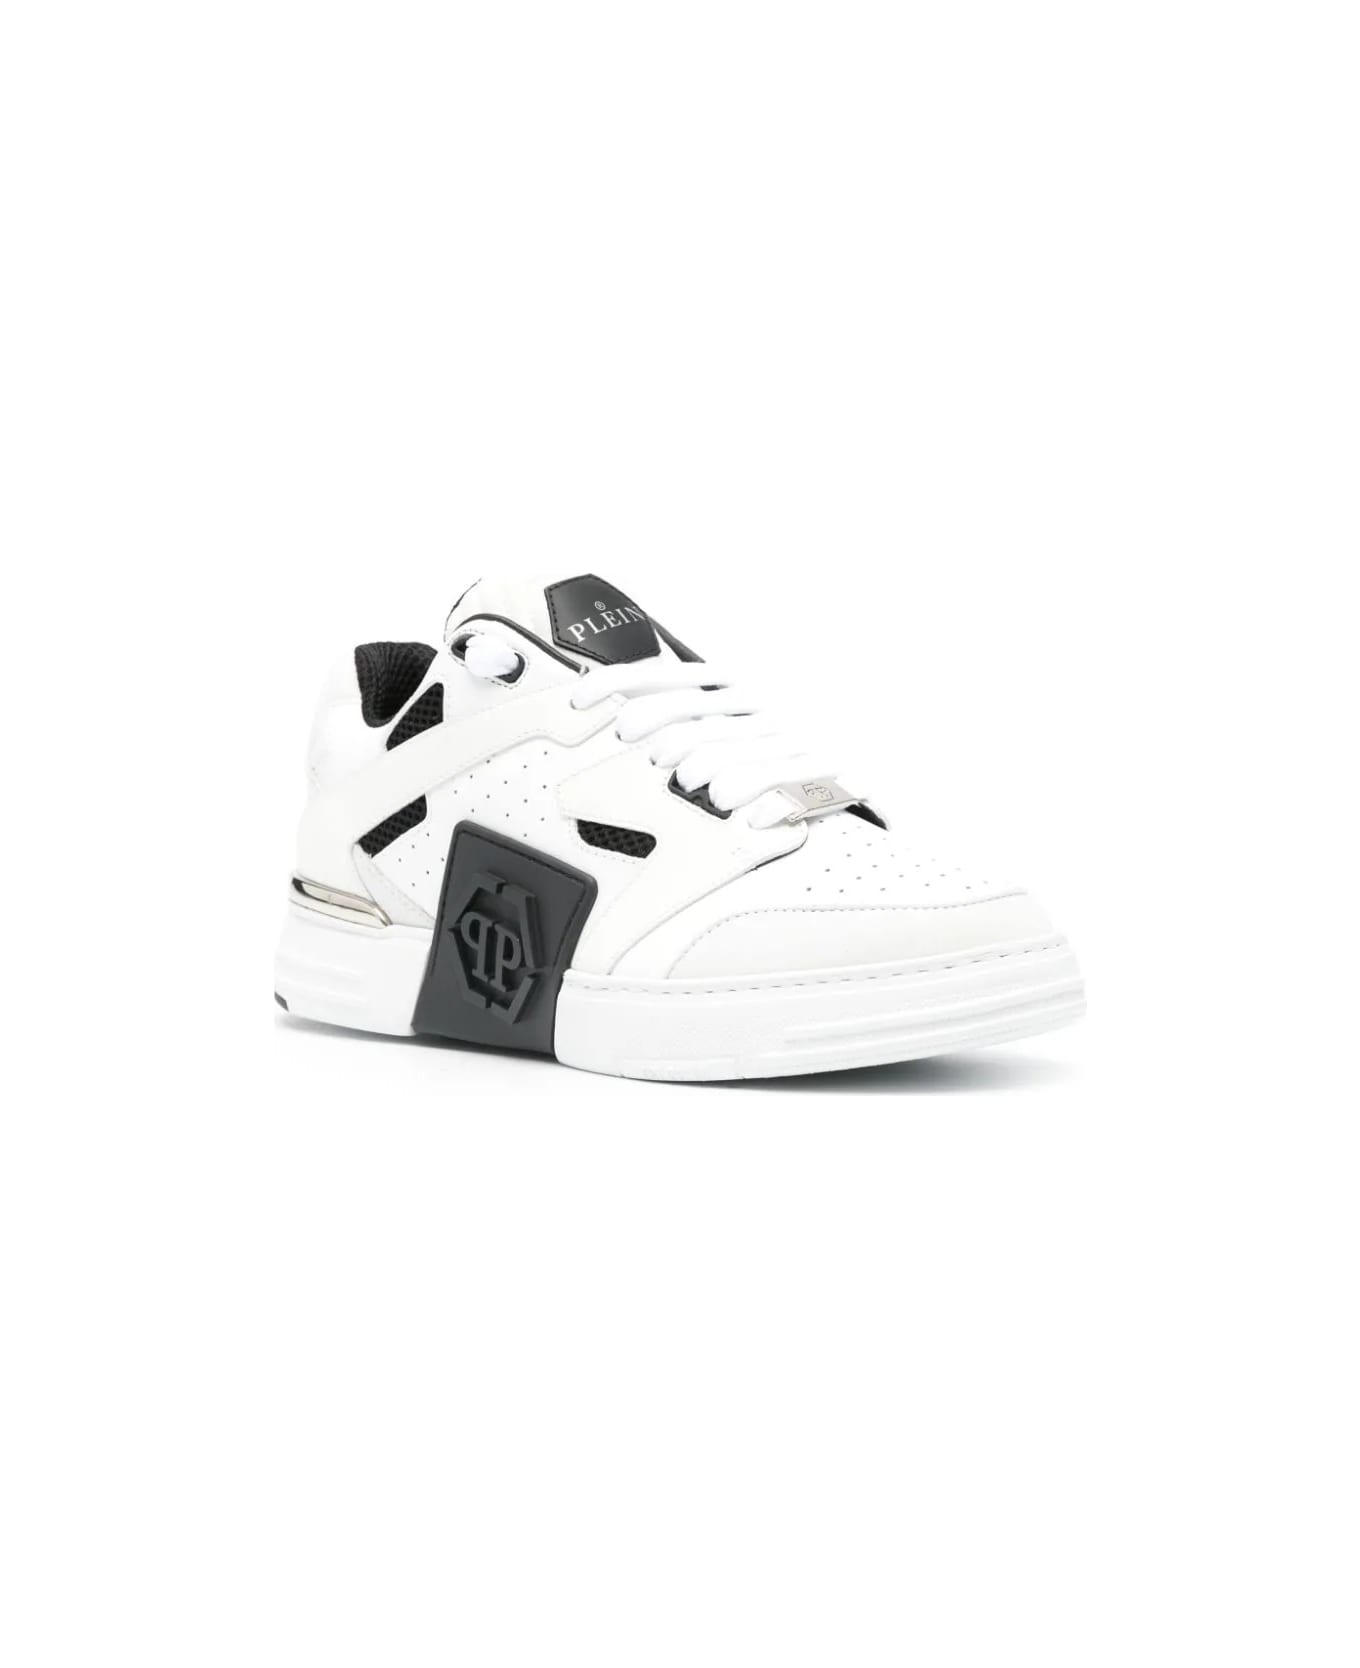 Philipp Plein White And Black Phantom Street Sneakers - White スニーカー